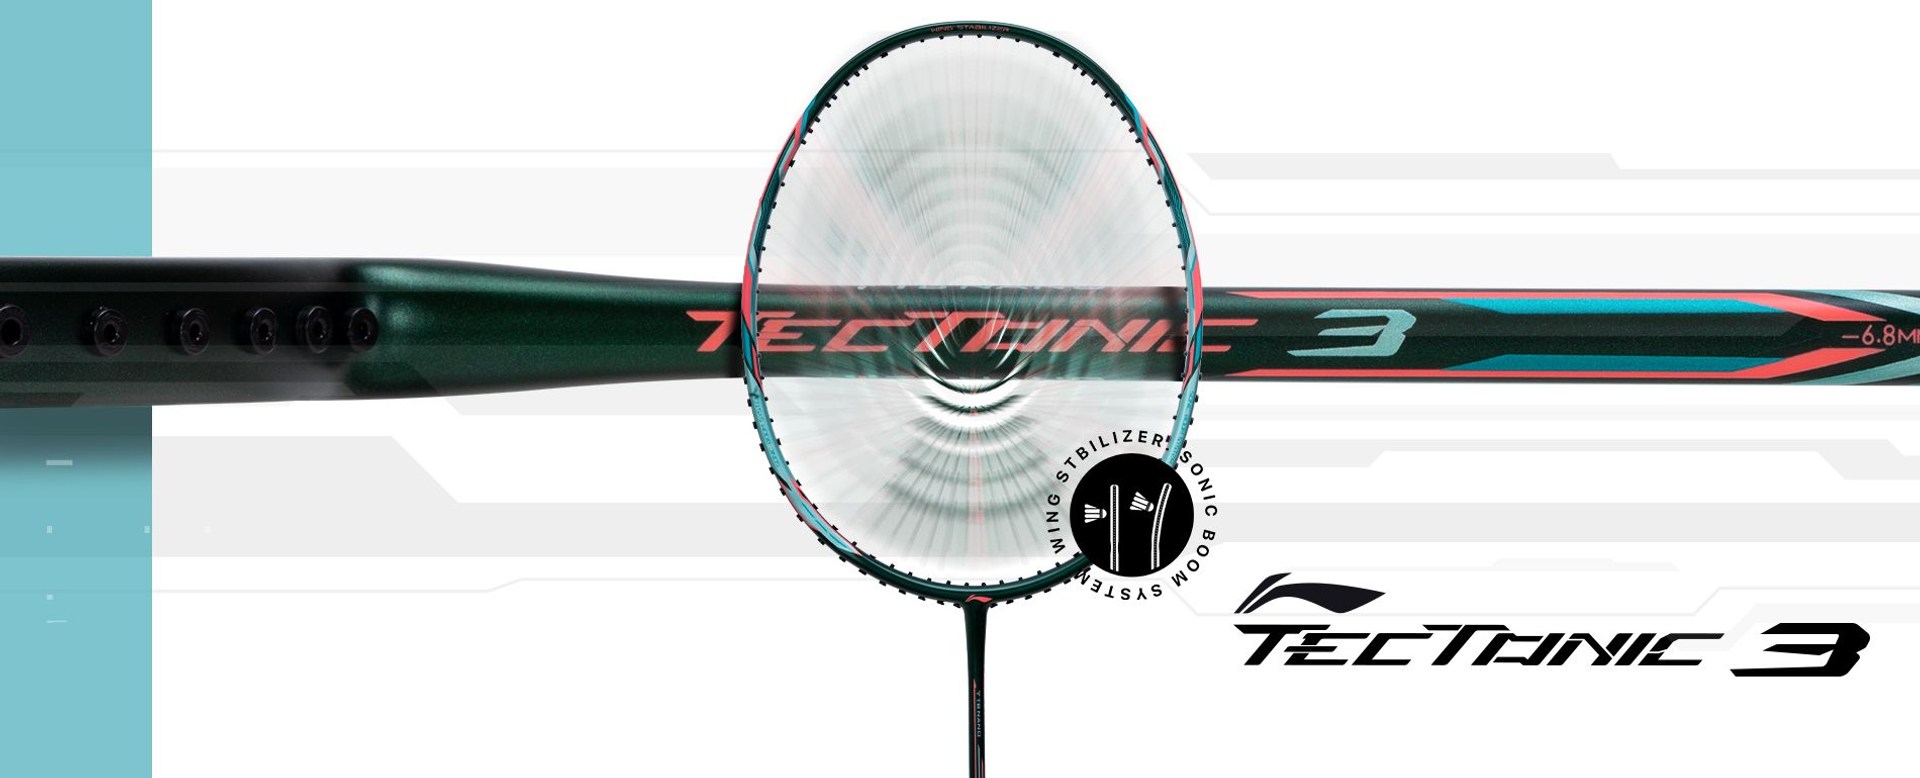 Close up of Tectonic 3 Badminton racket by Li-Ning Studio